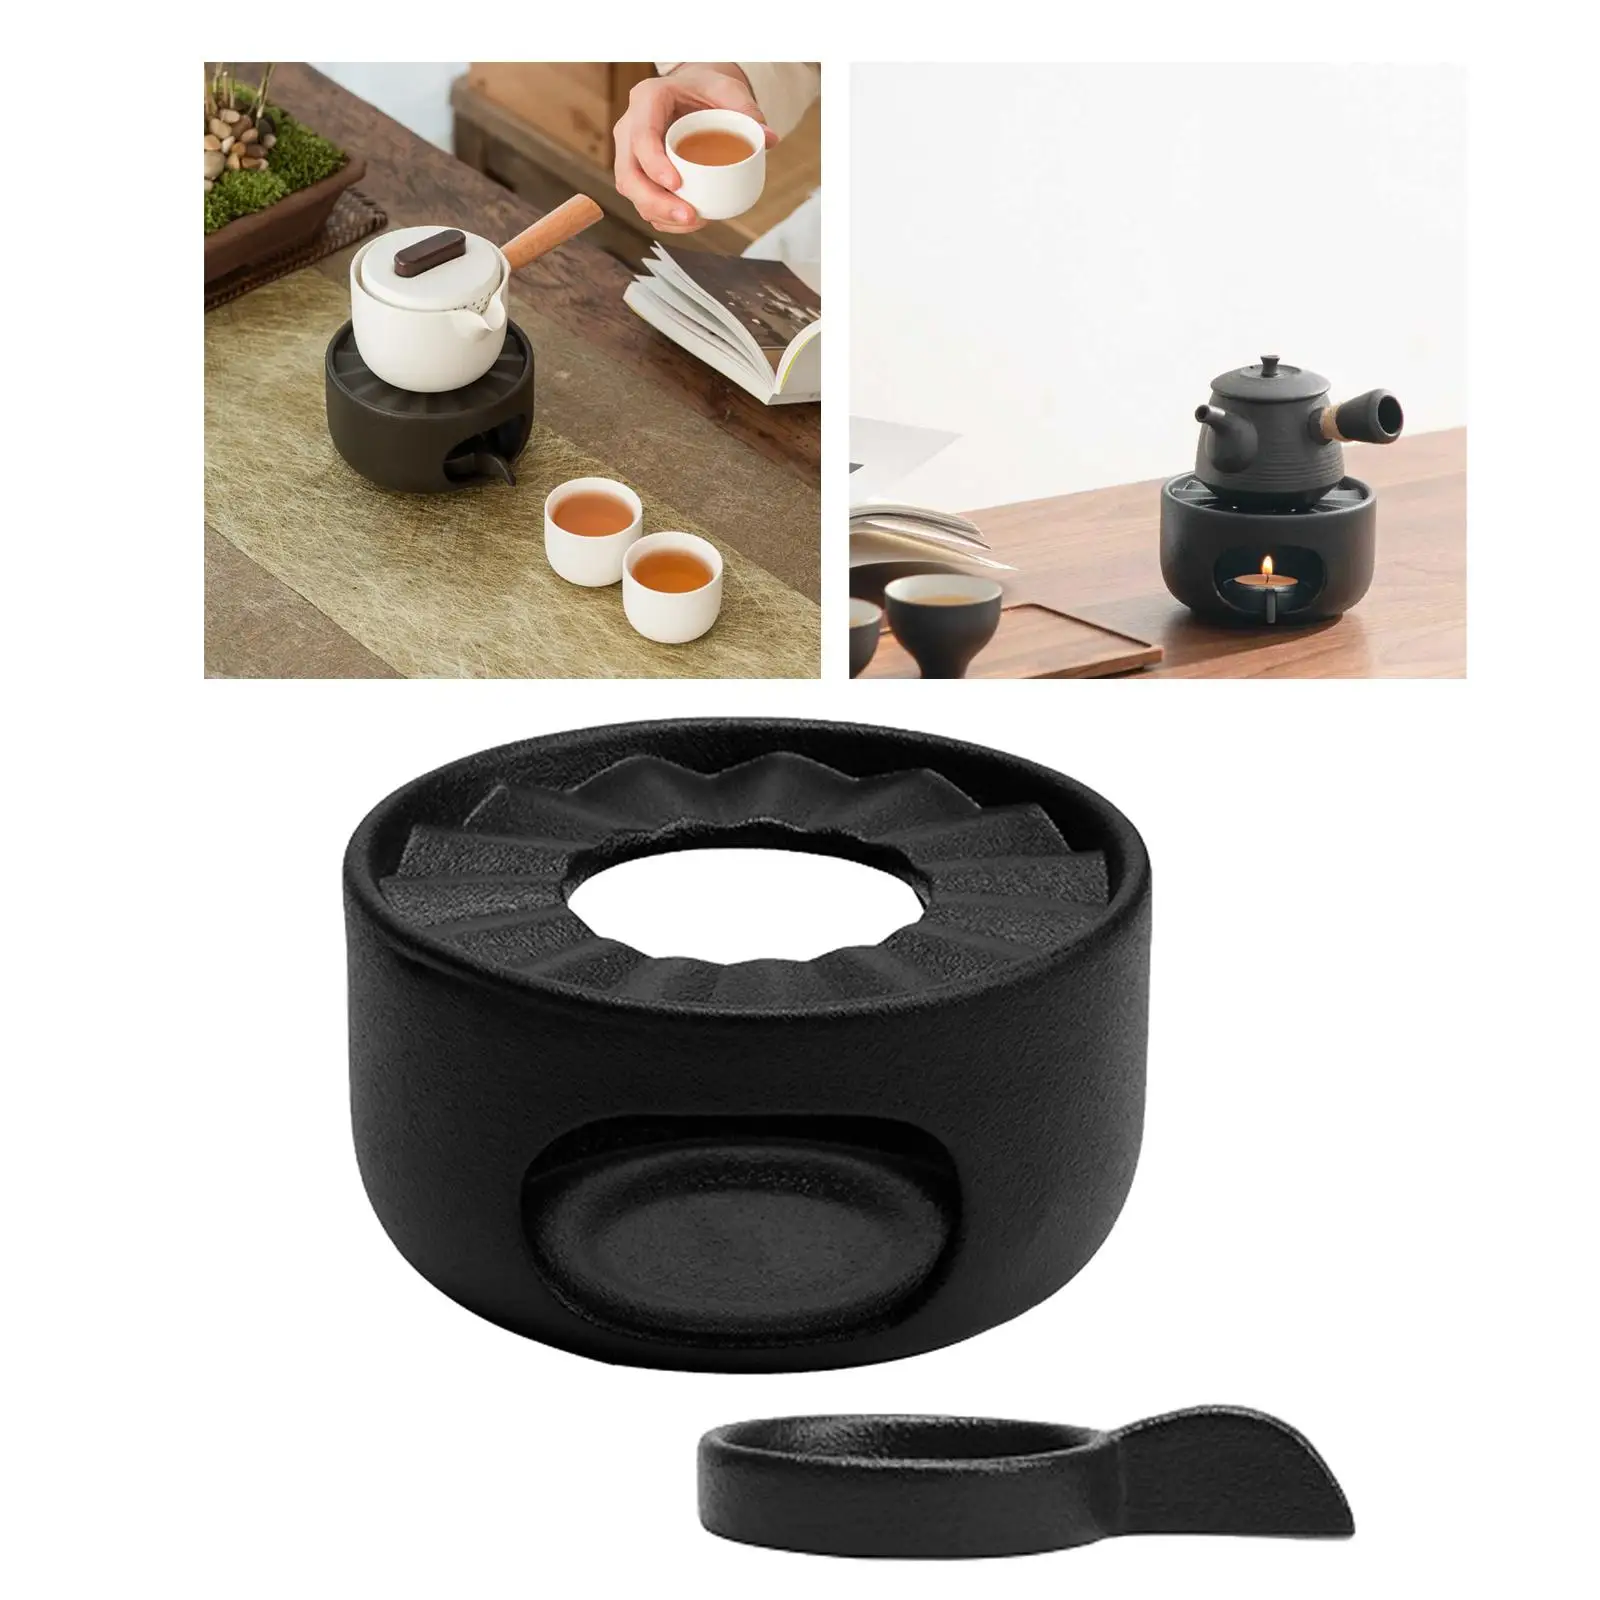 Teapot Warmer for Coffee, Milk, Tea Heating Burner, Tealight